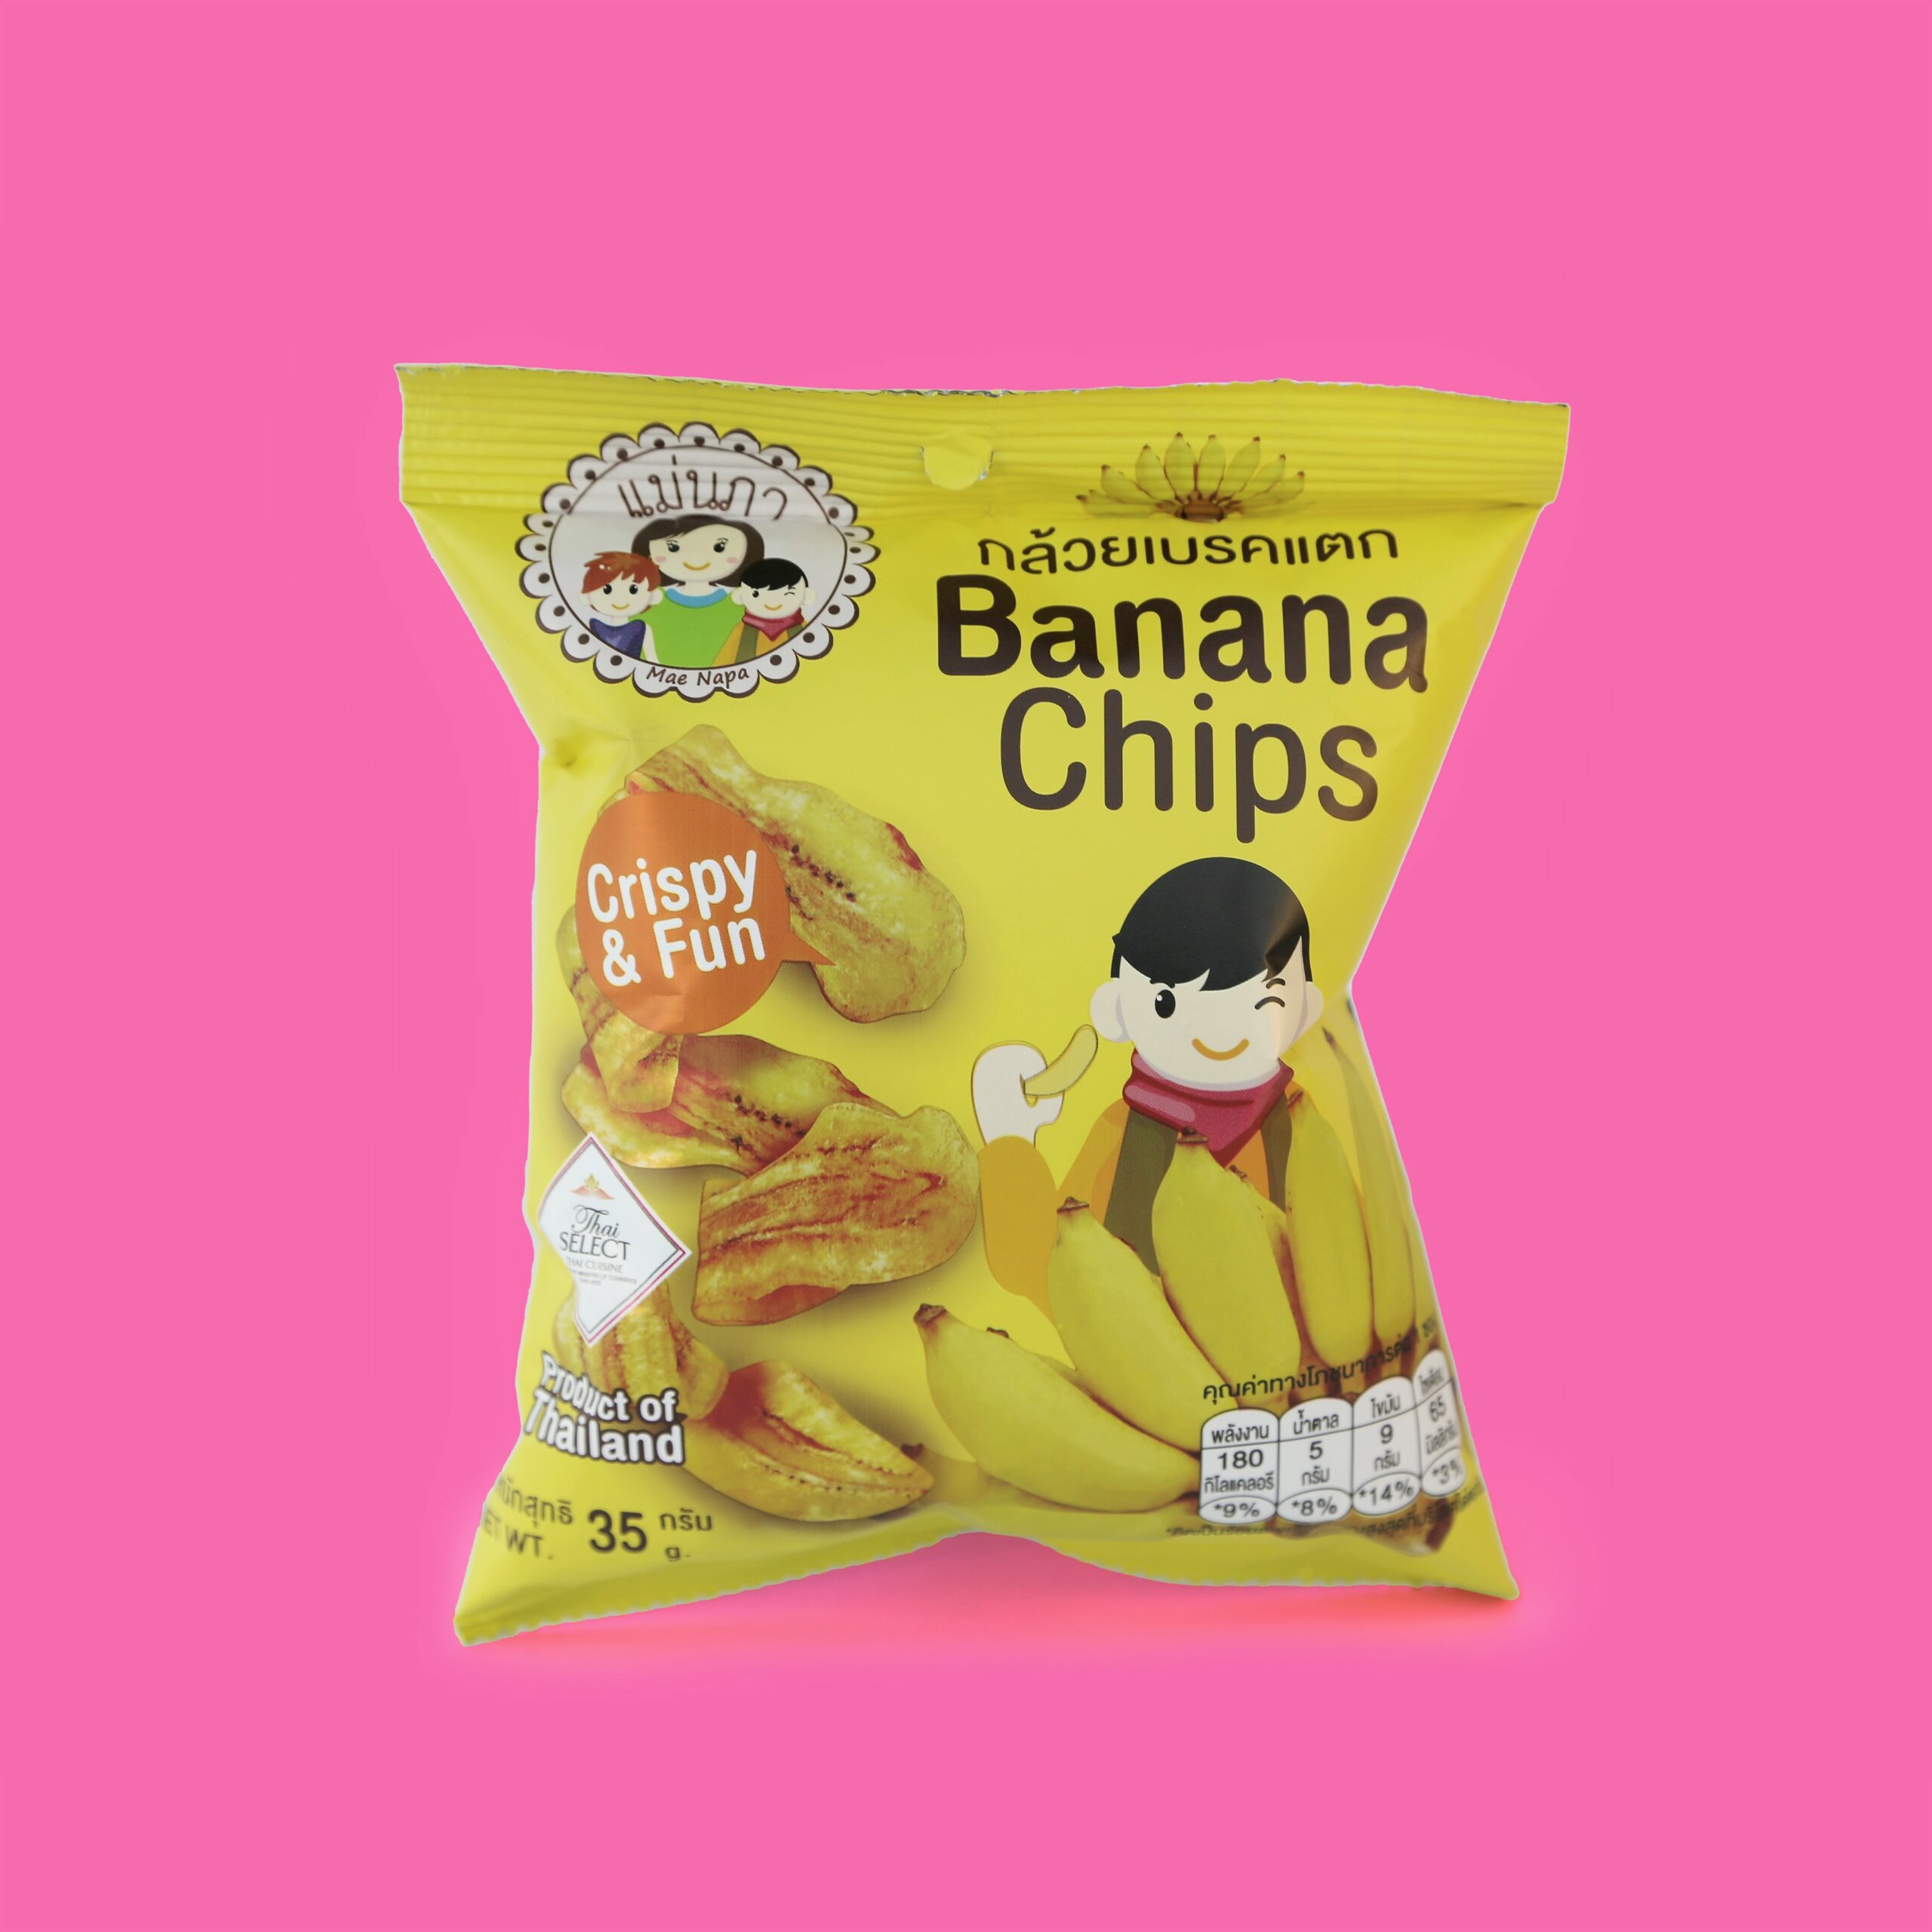 MAe Napa crispy banana chips. OTOP Thai snack from local Thai business. Thai select brand